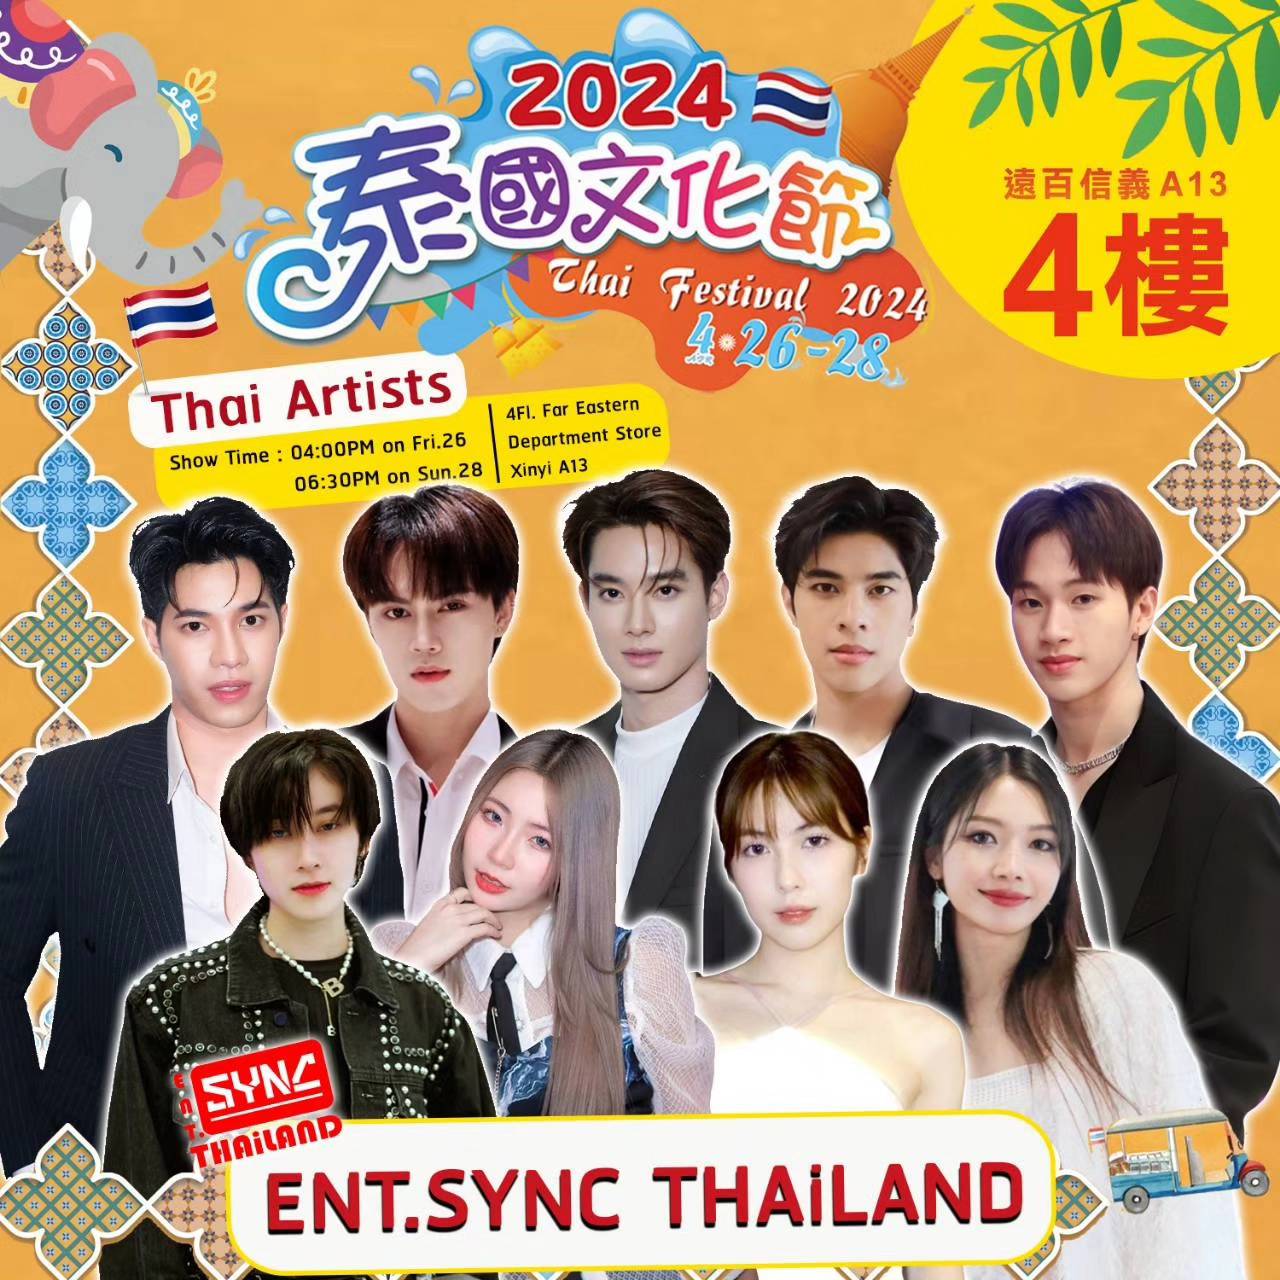 ENT.SYNC THAiLAND จับมือ IDX ENTERTAINMENT นำนักแสดงซีรีส์ & ศิลปิน Idol โชว์พลัง Soft Power ในงาน Thai Festival 2024 Taipei Taiwan